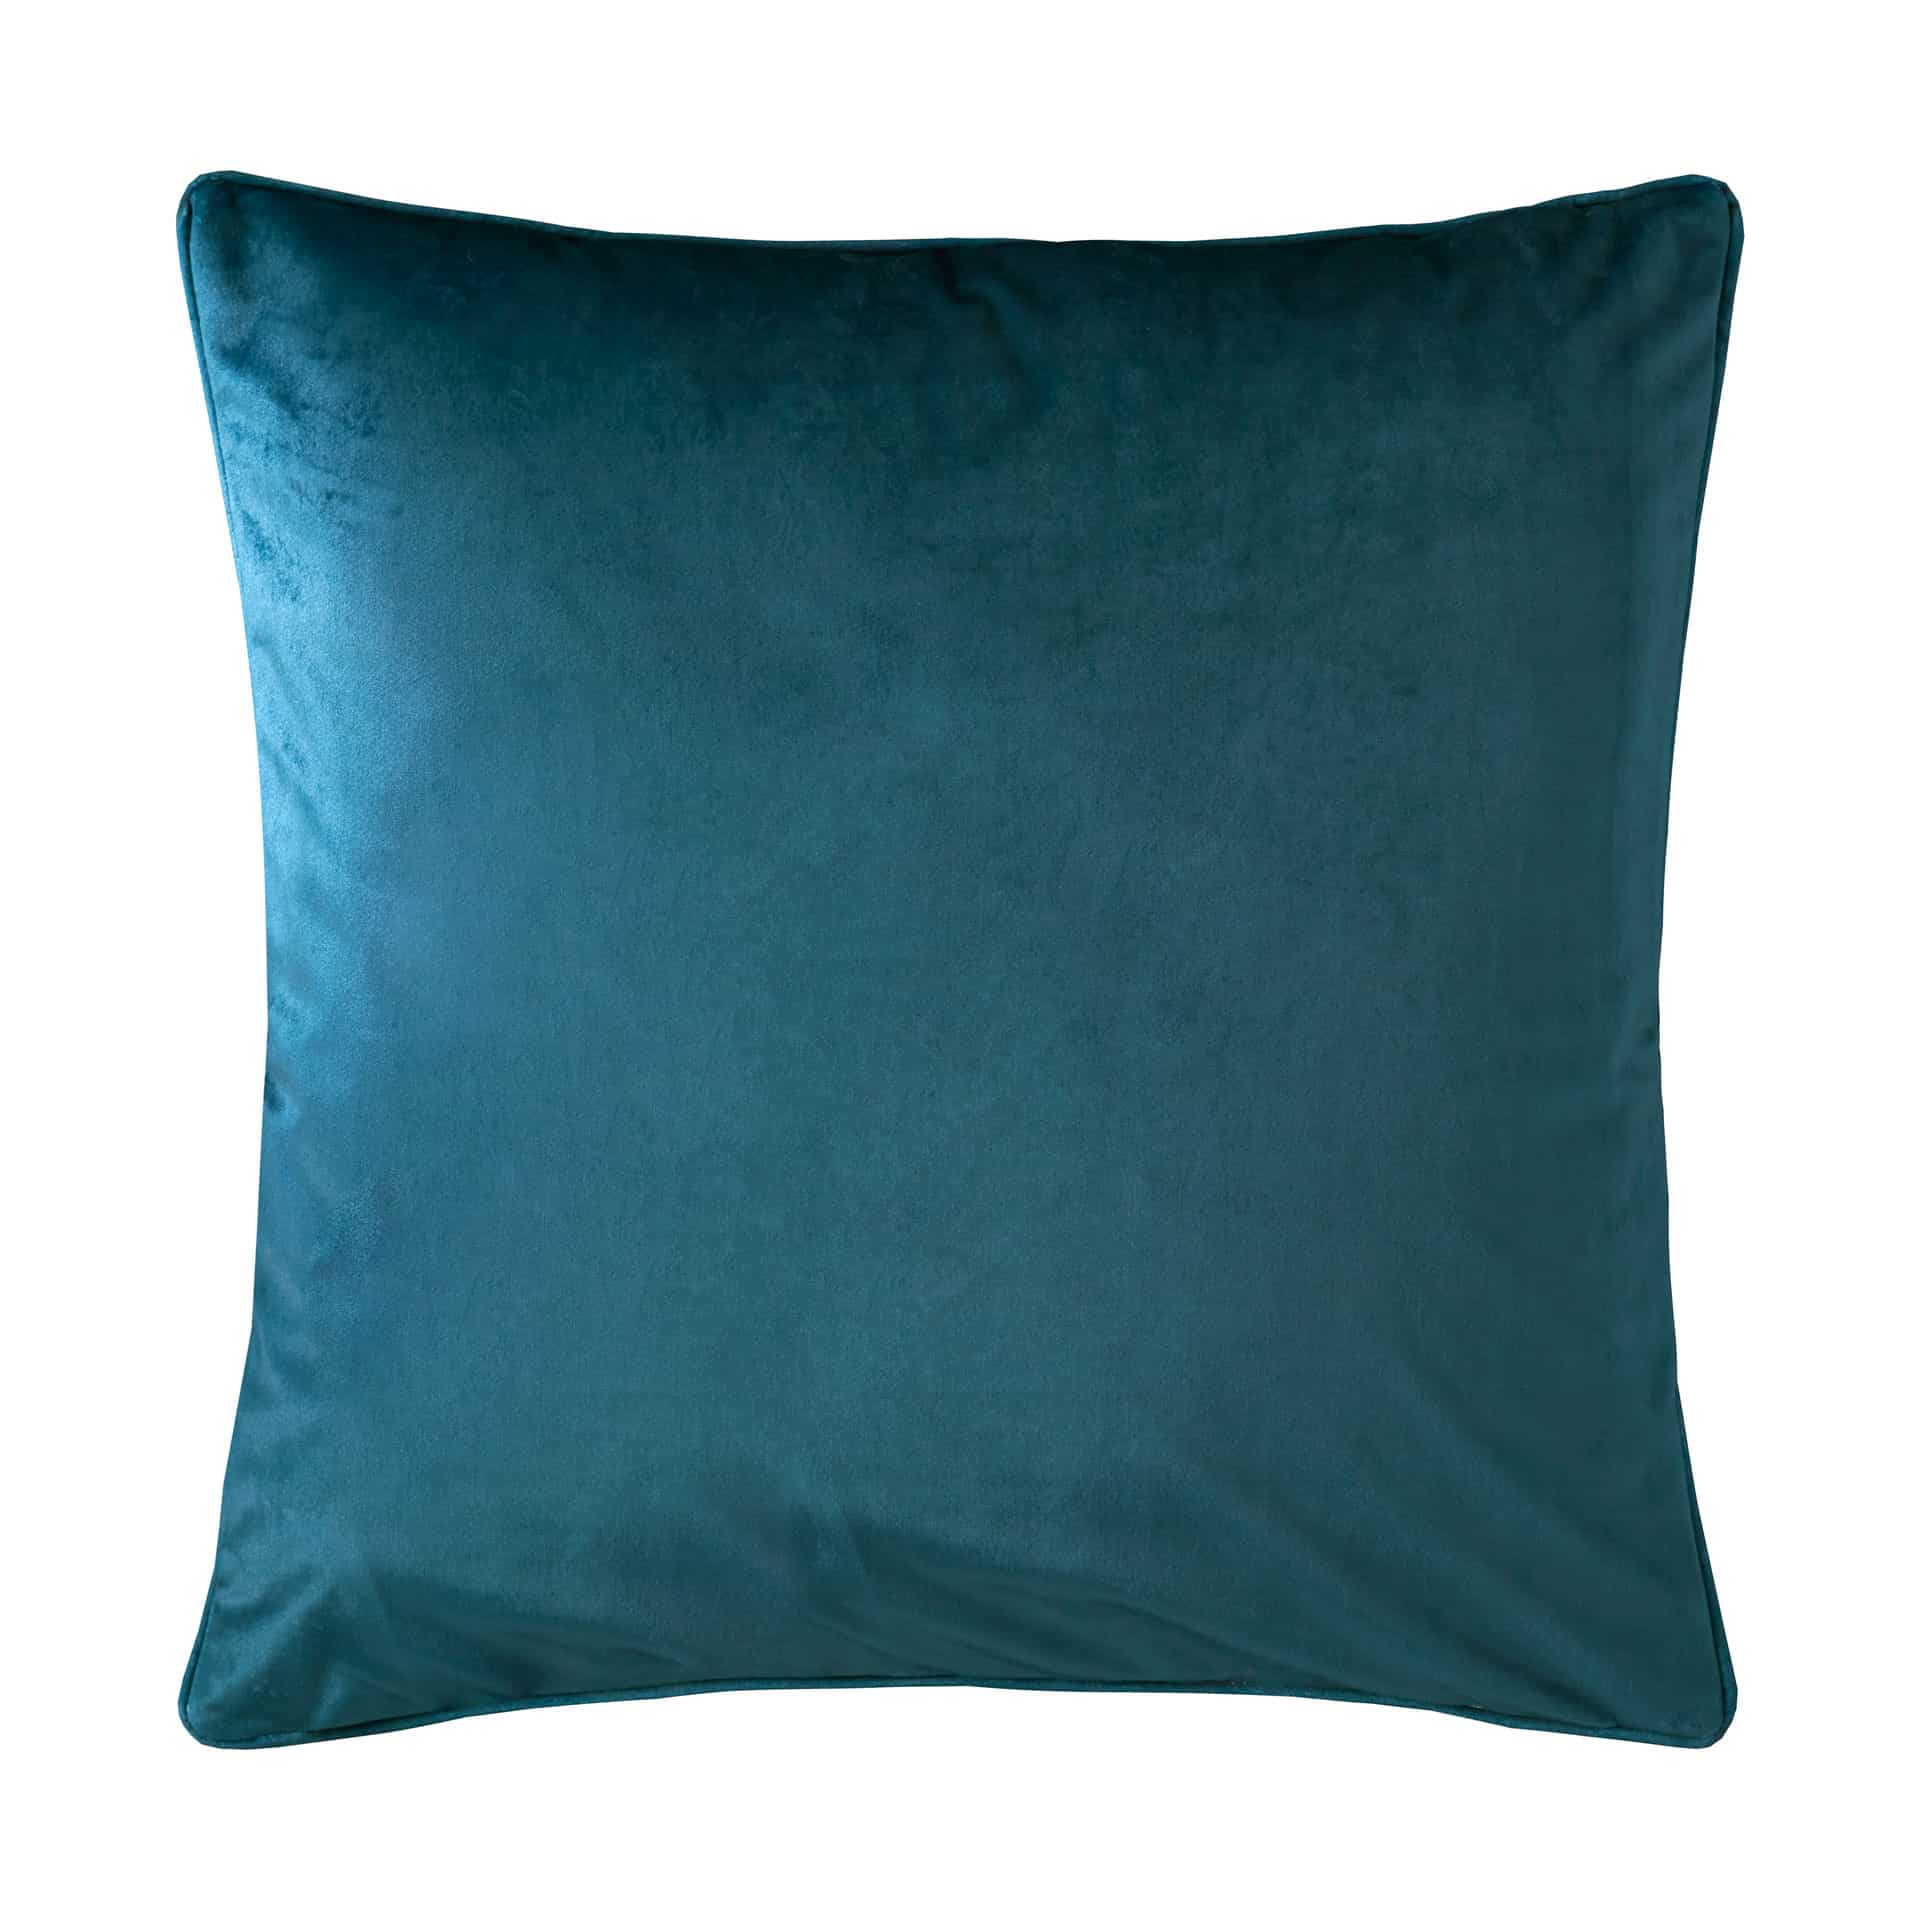 Waterfall Vines  Turquoise tropical cushion - Clarissa Hulse